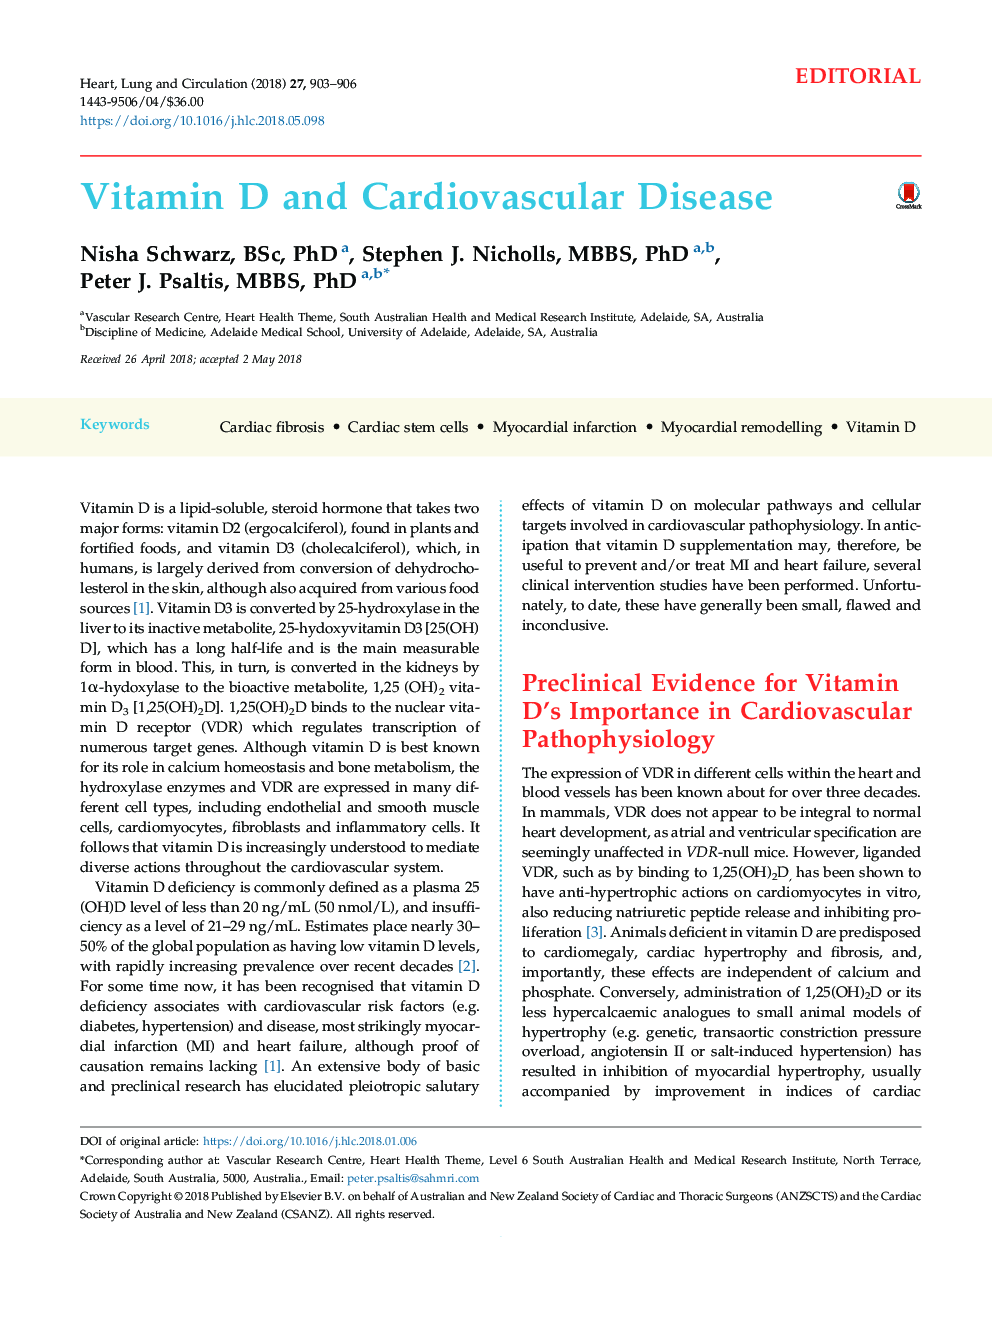 Vitamin D and Cardiovascular Disease